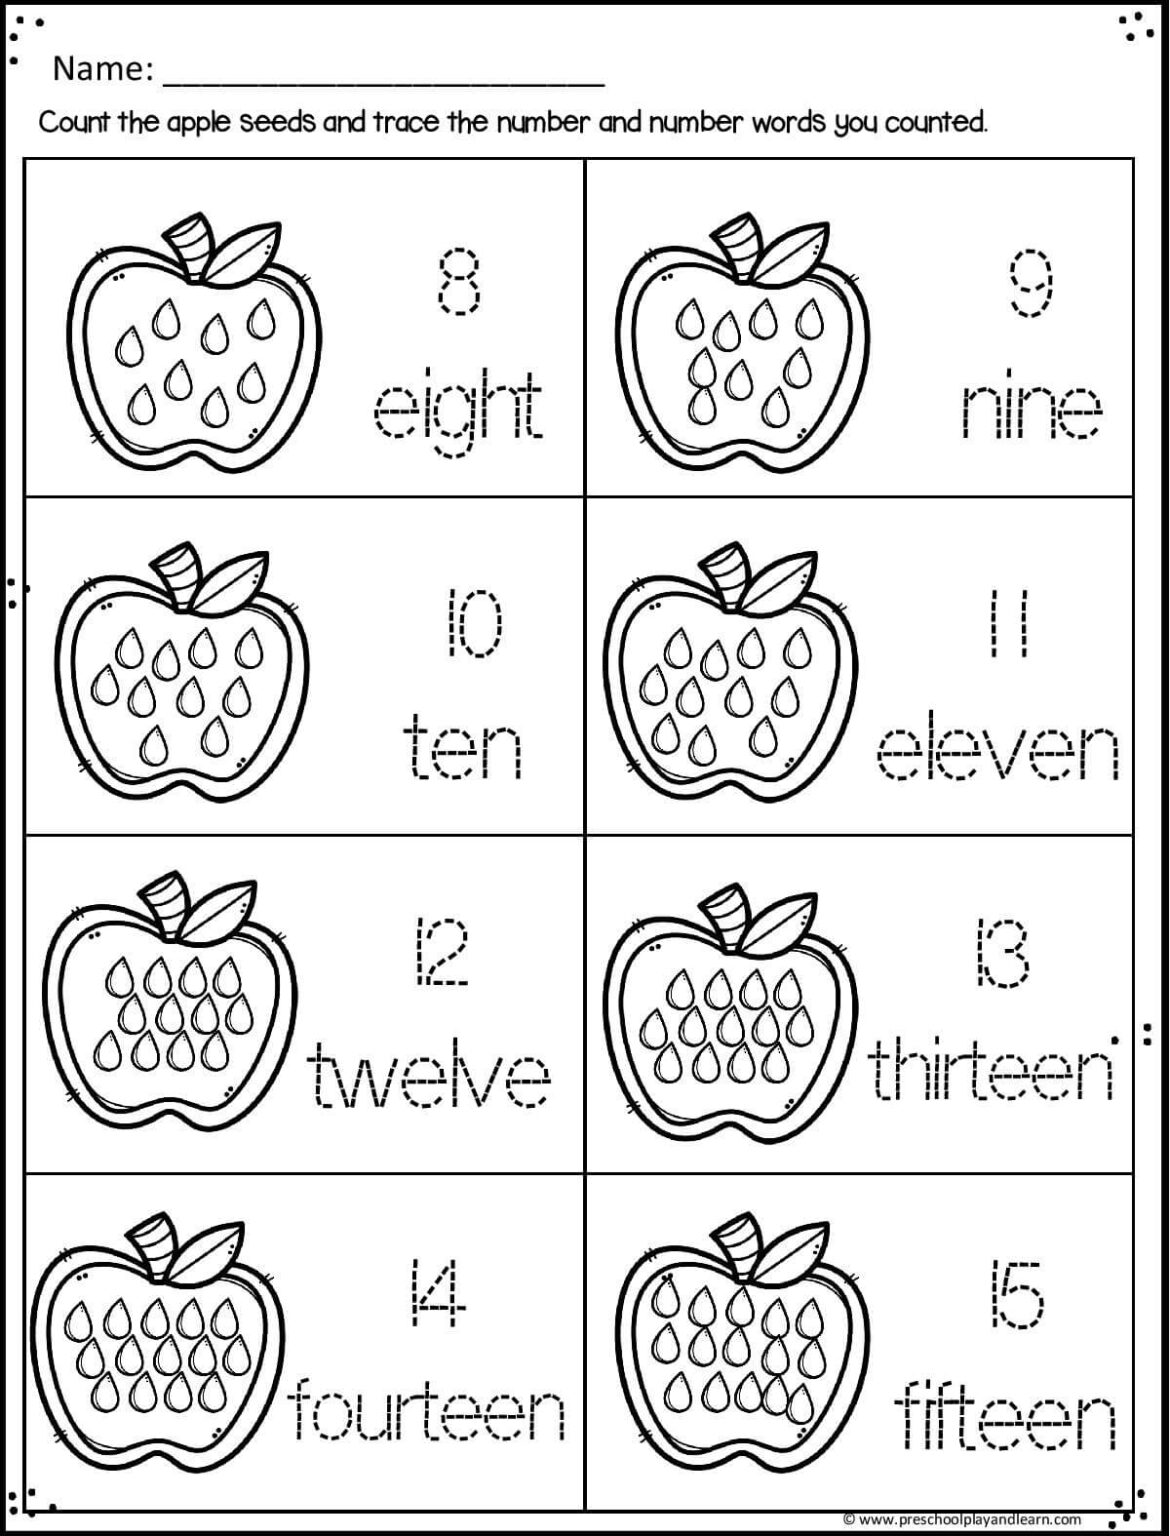 free-printable-apple-worksheets-for-preschool-and-kindergarten